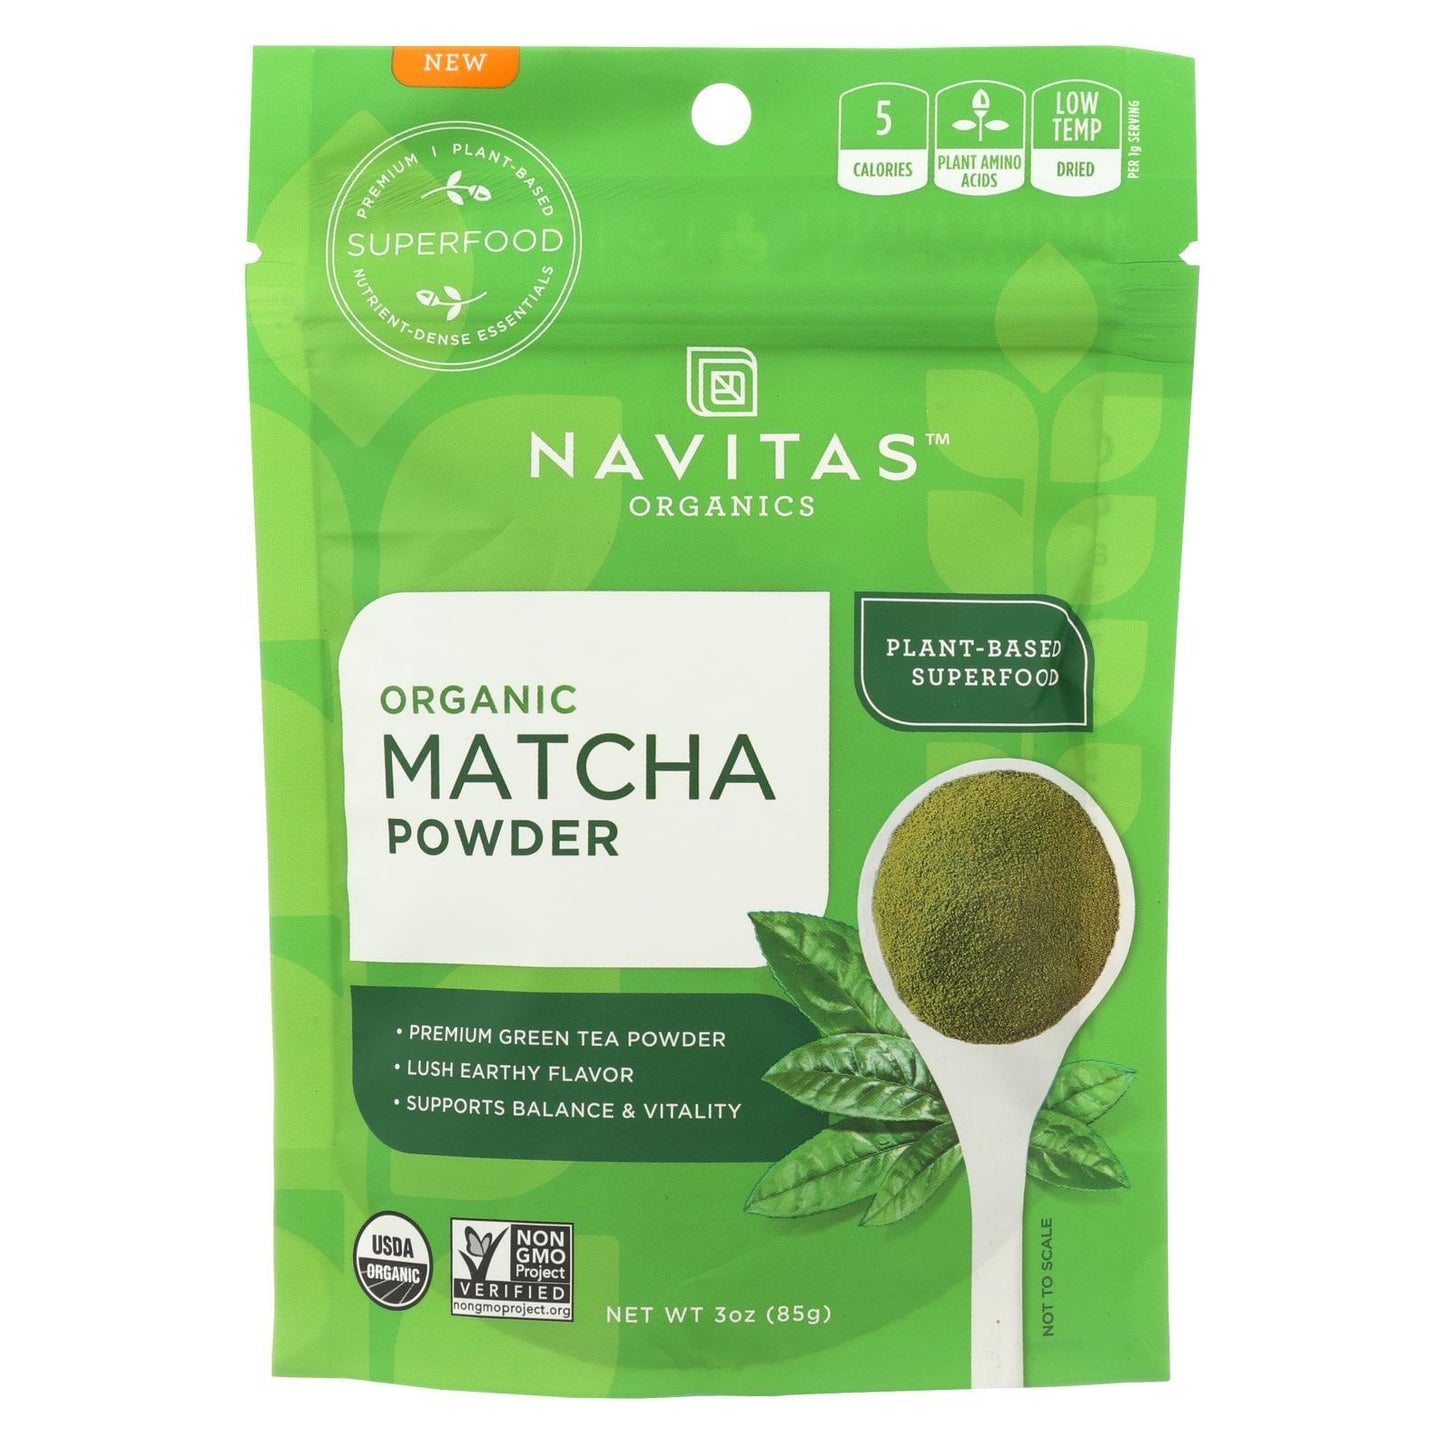 Navitas Organics Organic Matcha Powder - Case Of 6 - 3 Oz